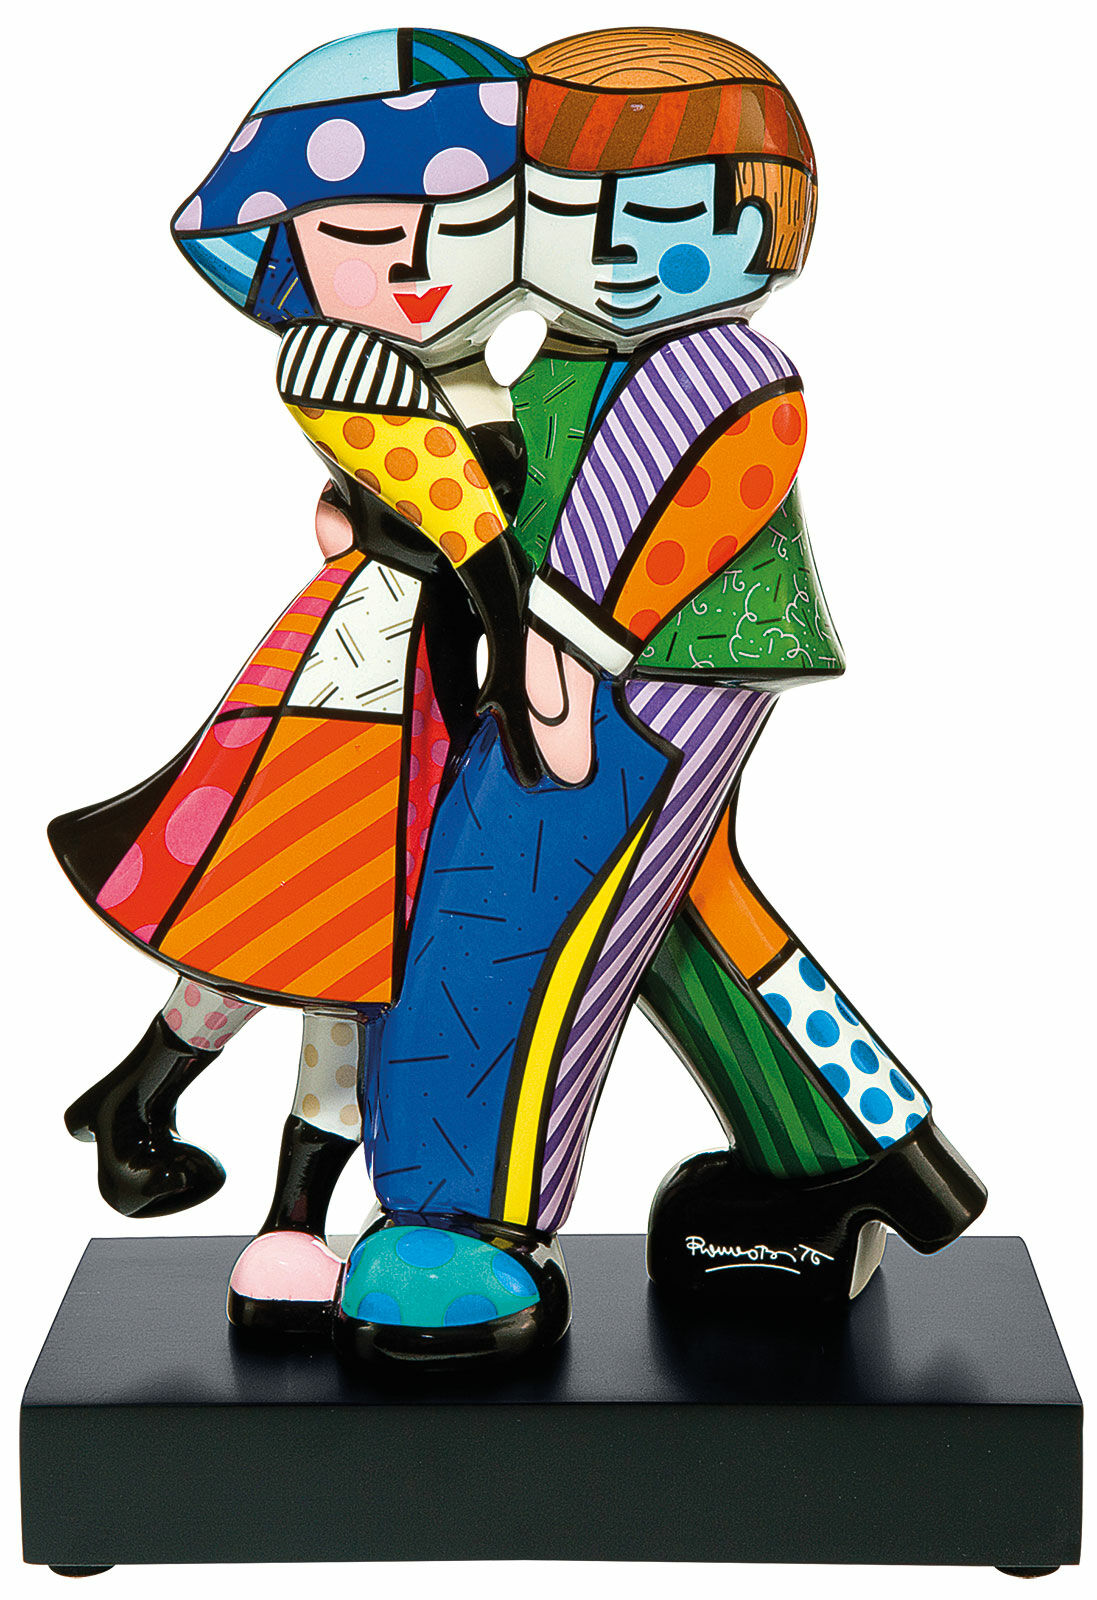 Porcelain sculpture "Cheek to Cheek" (small version) by Romero Britto